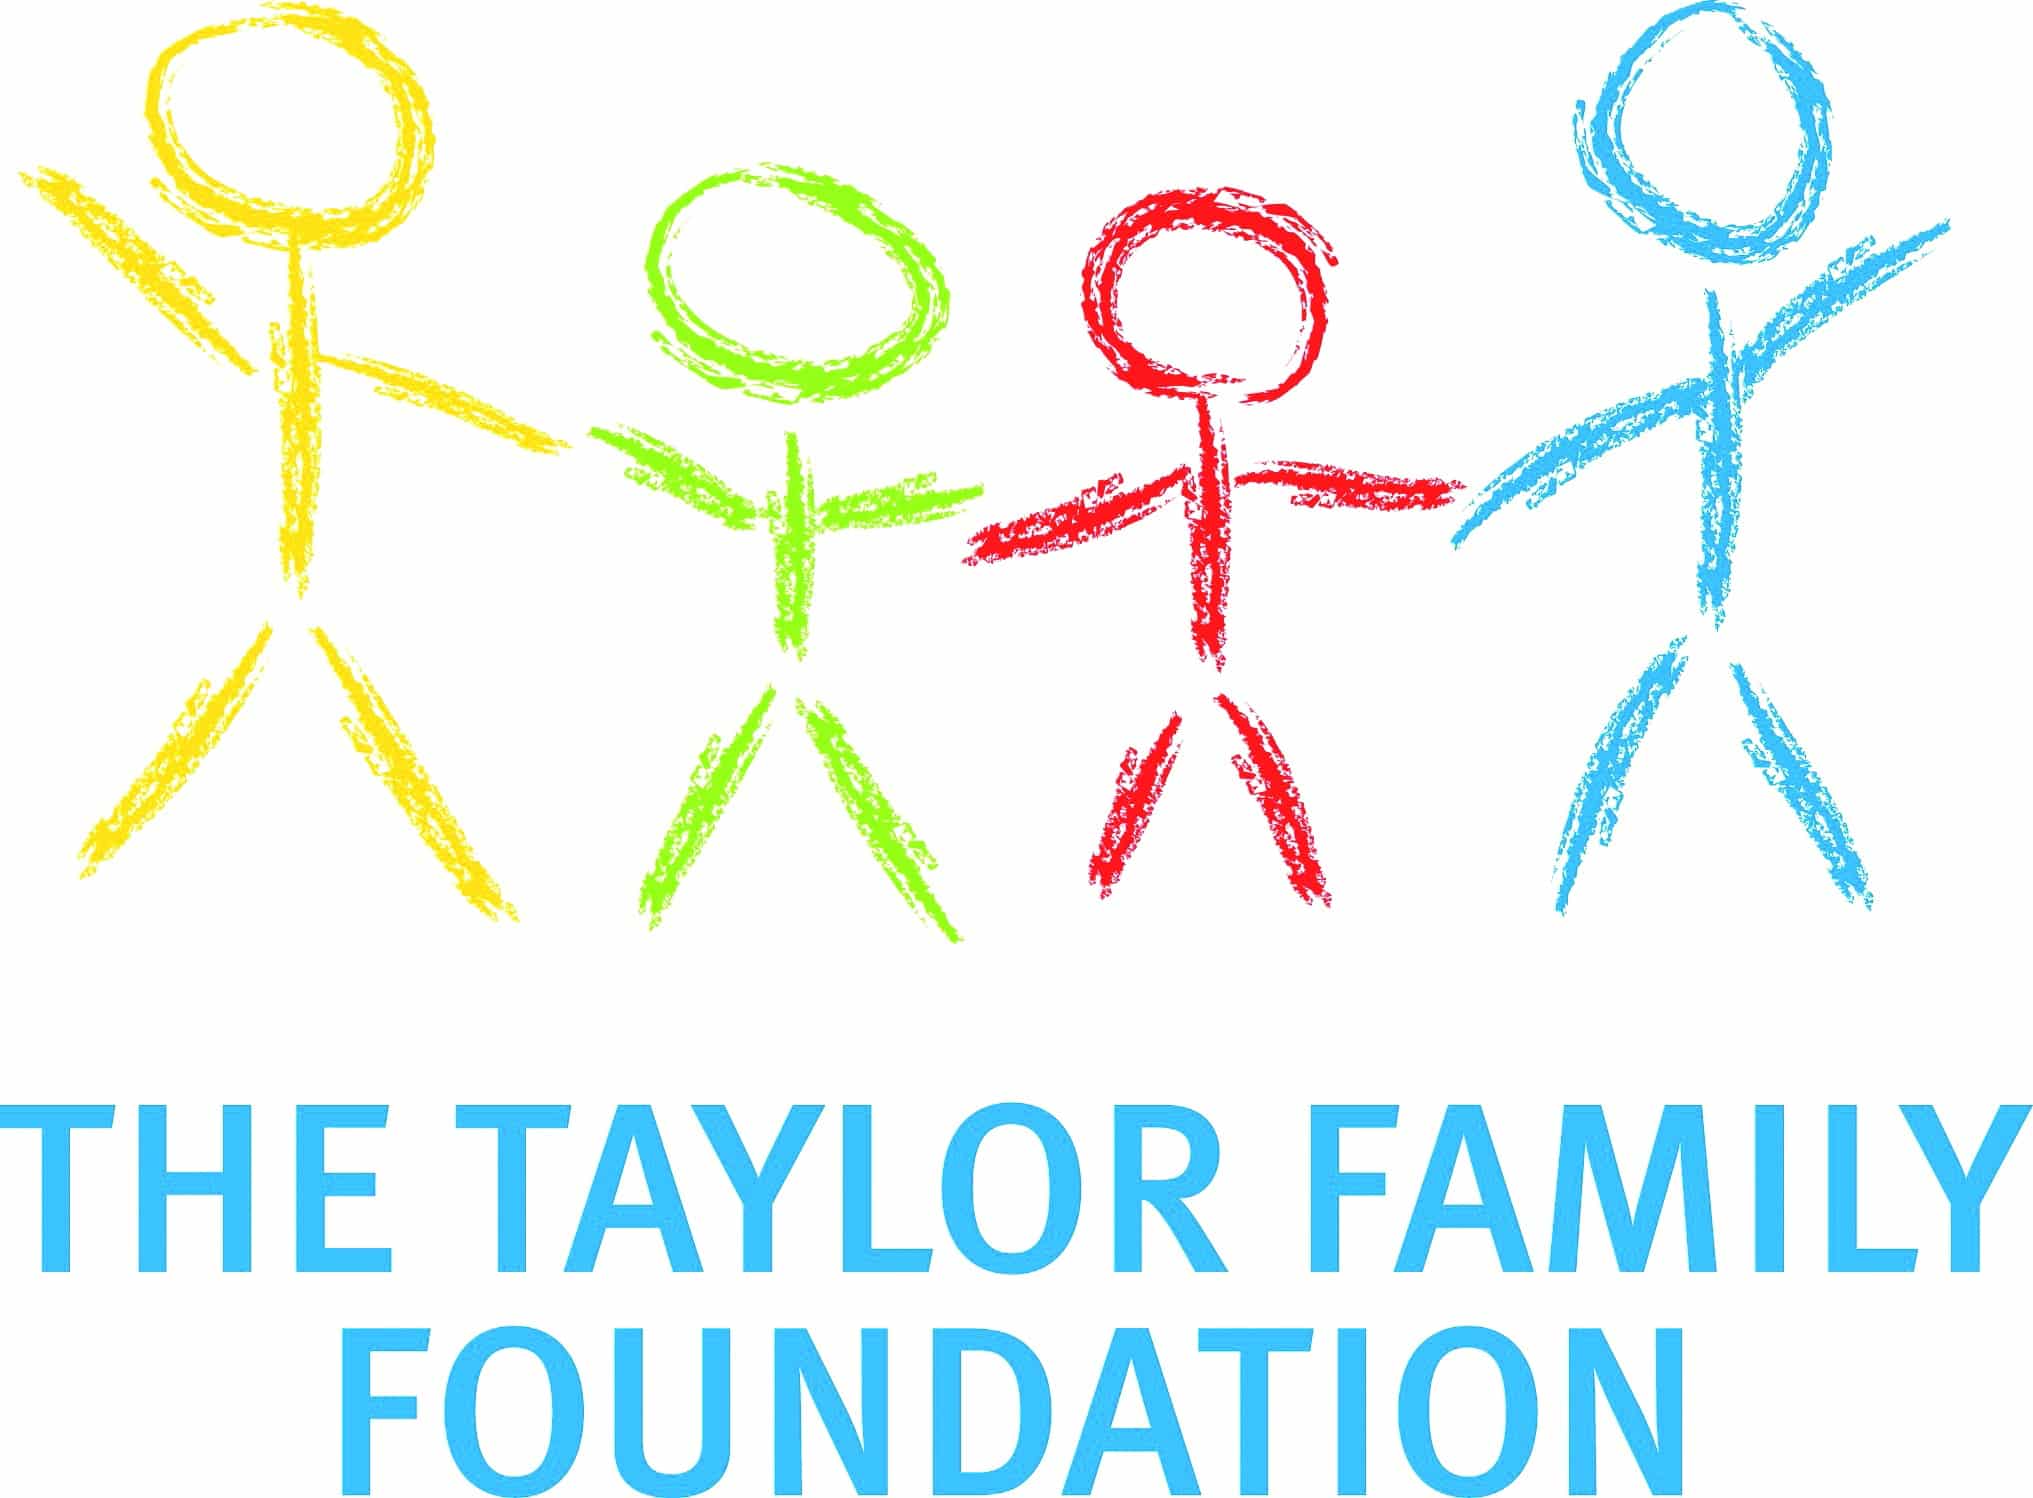 The Taylor Family Foundation logo